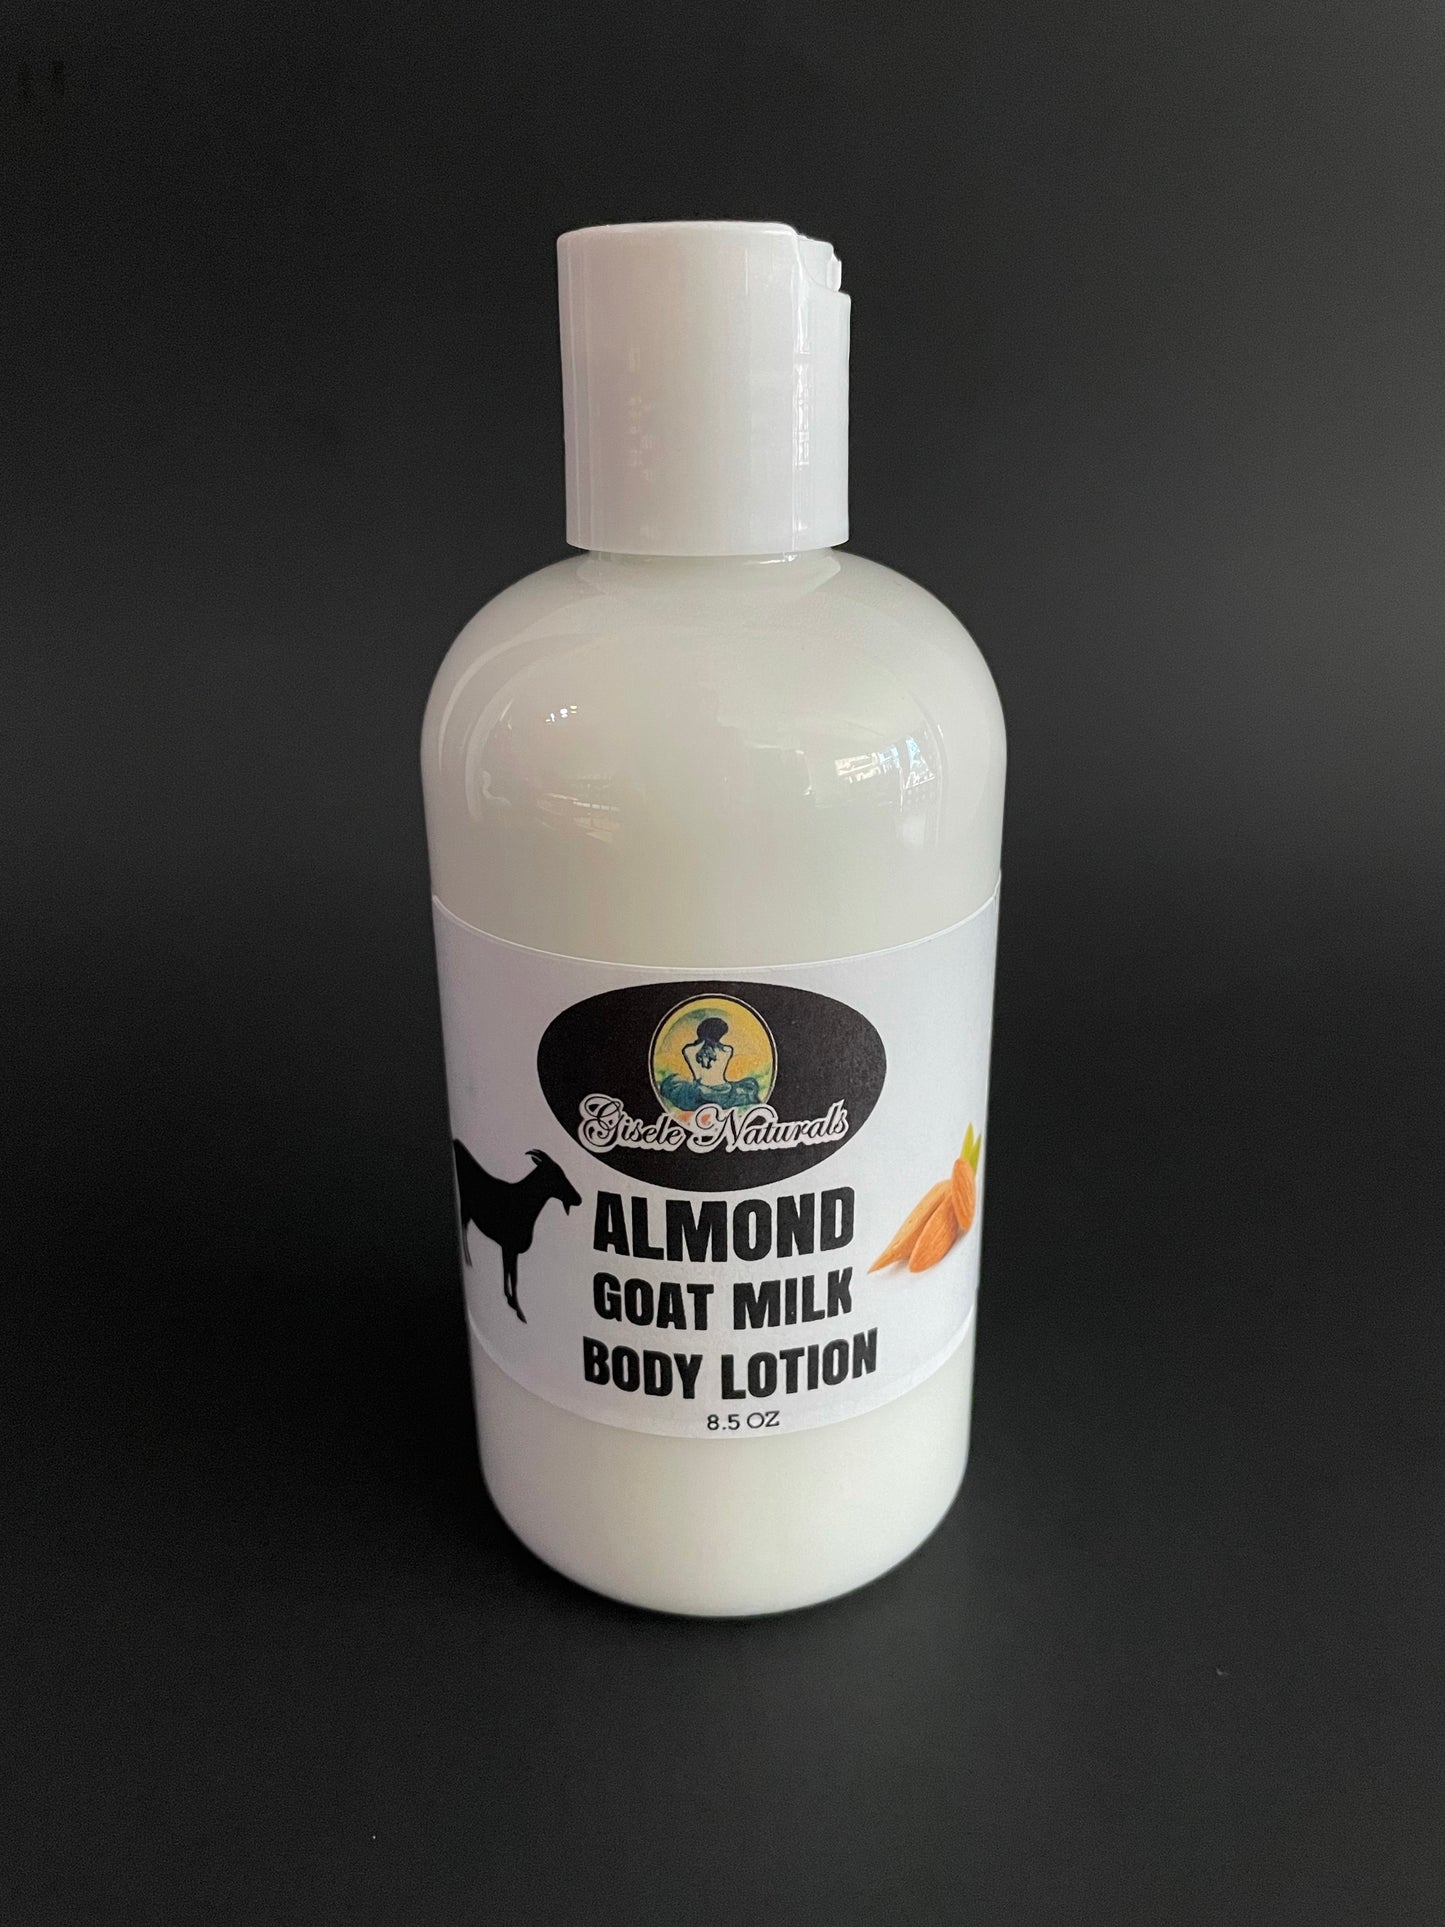 Almond Goats milk body lotion